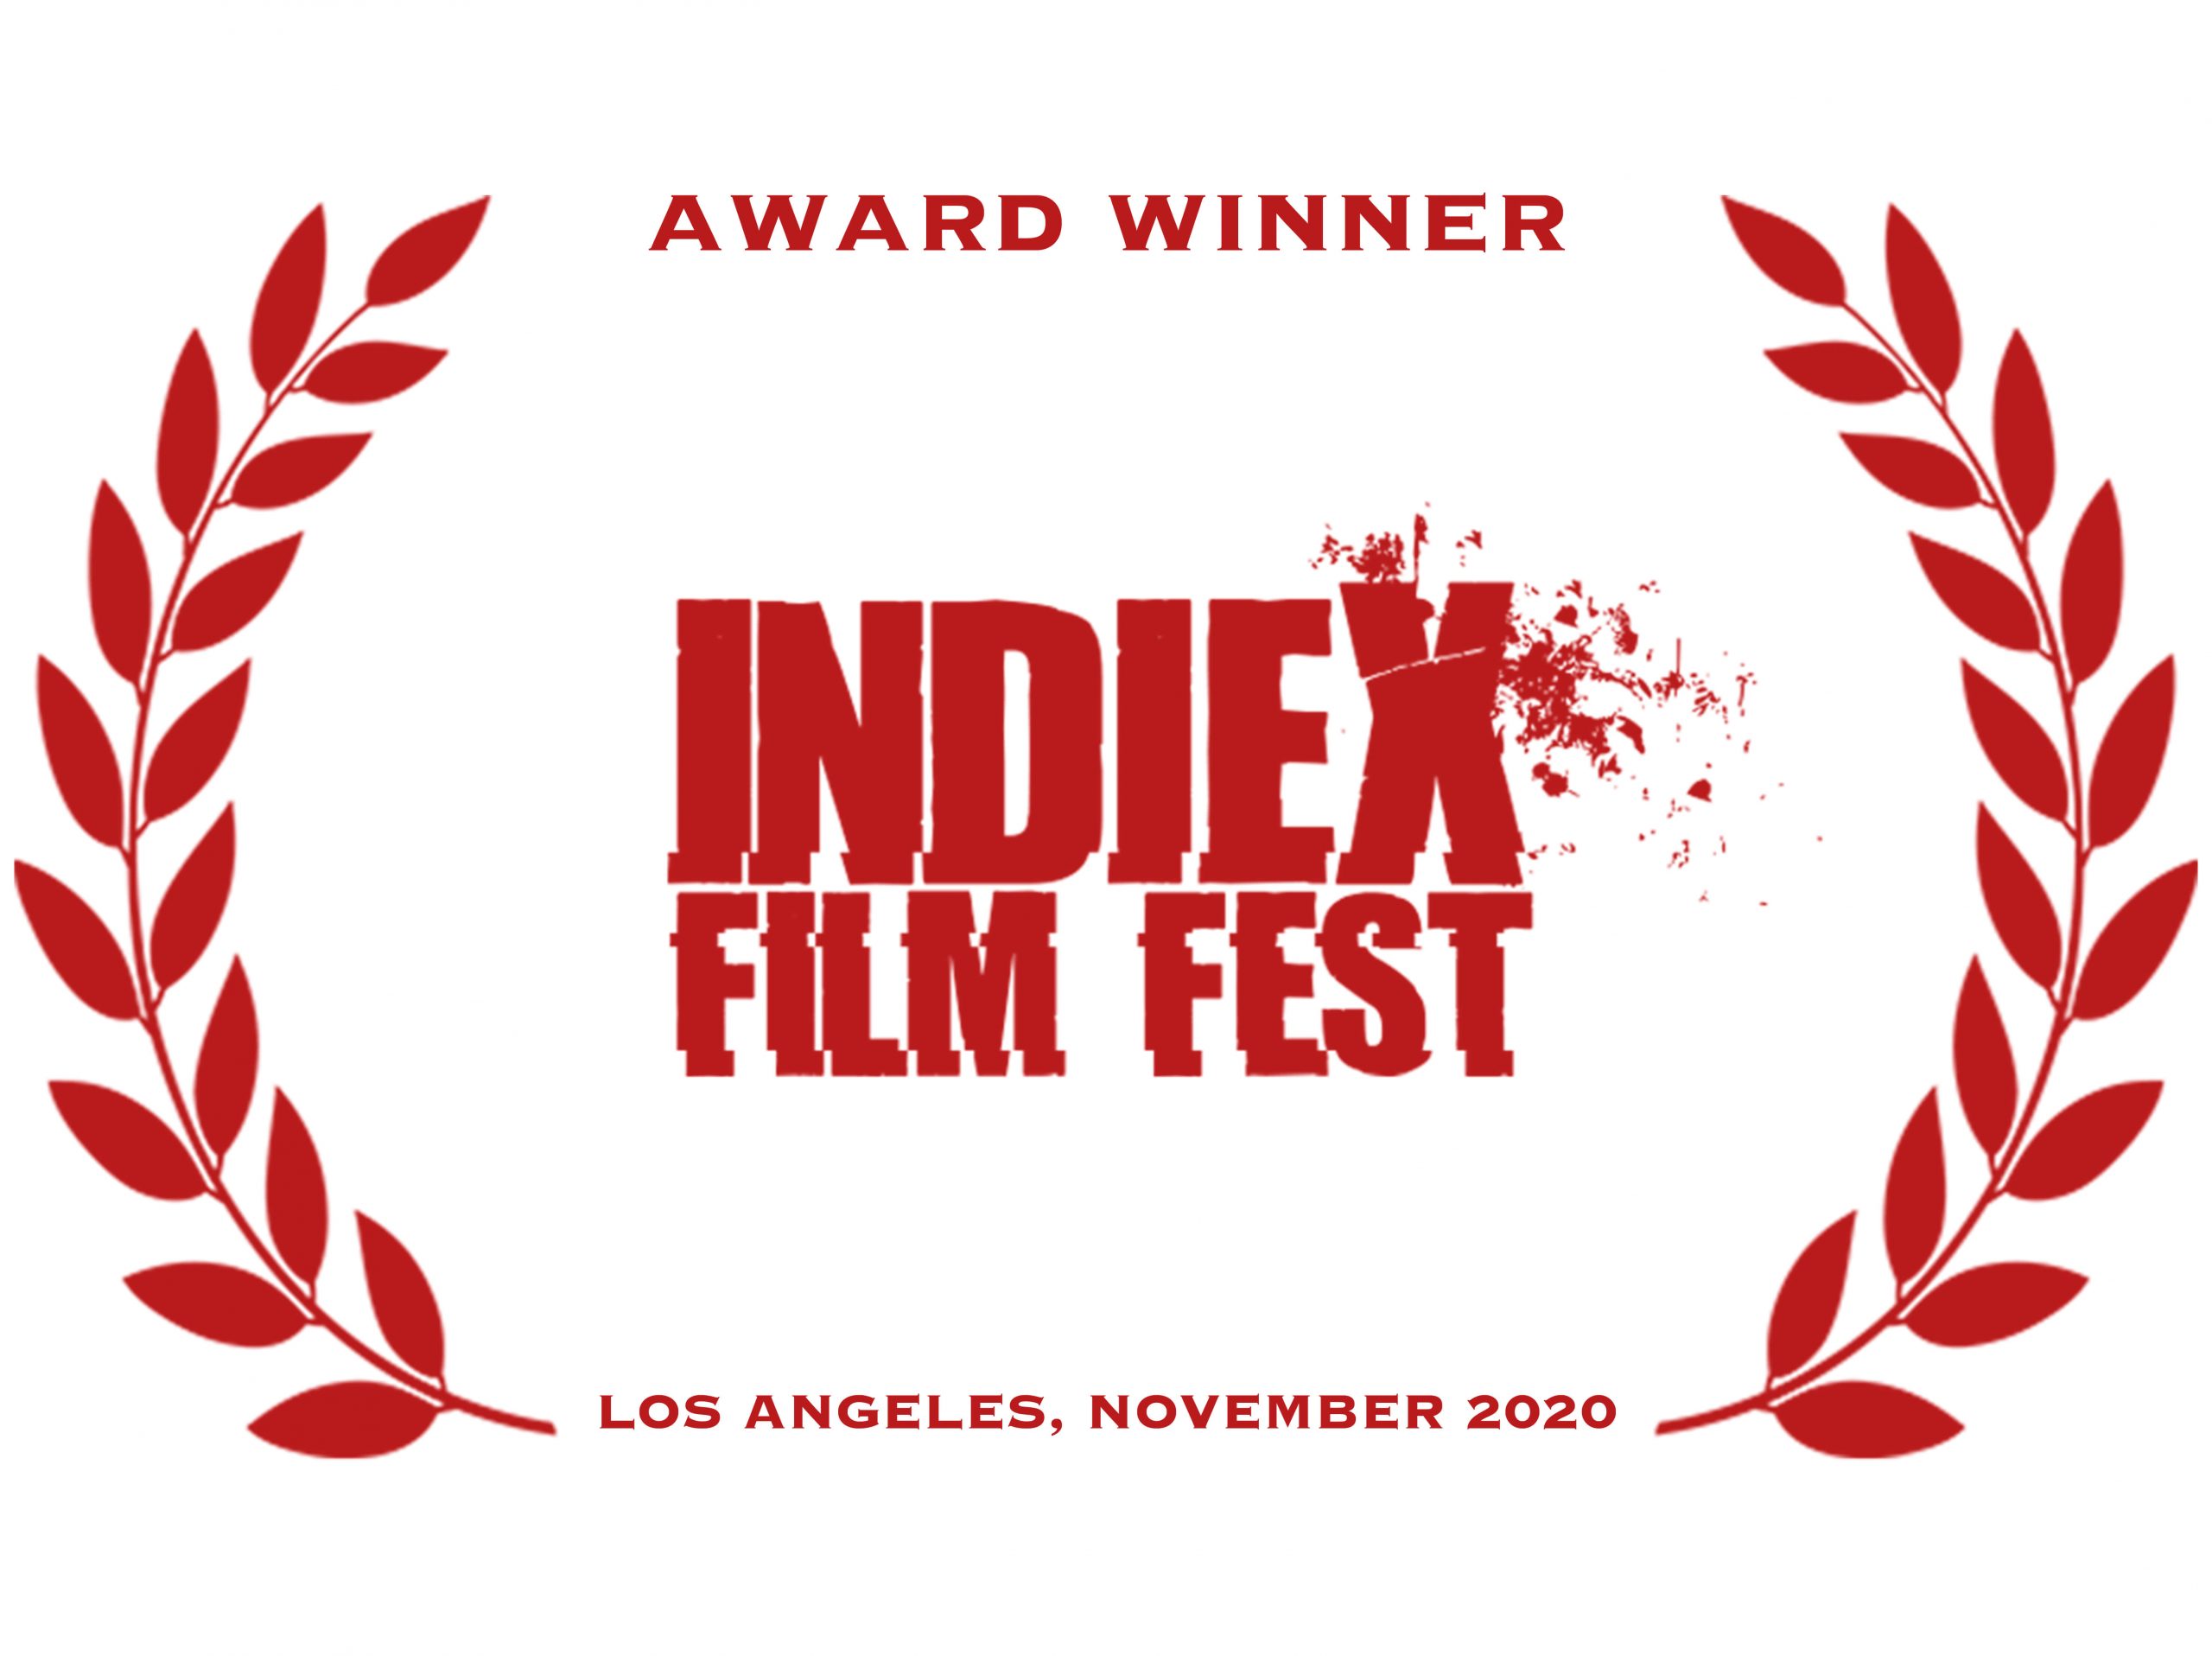 AWARD WINNER - INDIEX FILM FEST LOS ANGELES, NOVEMBER 2020